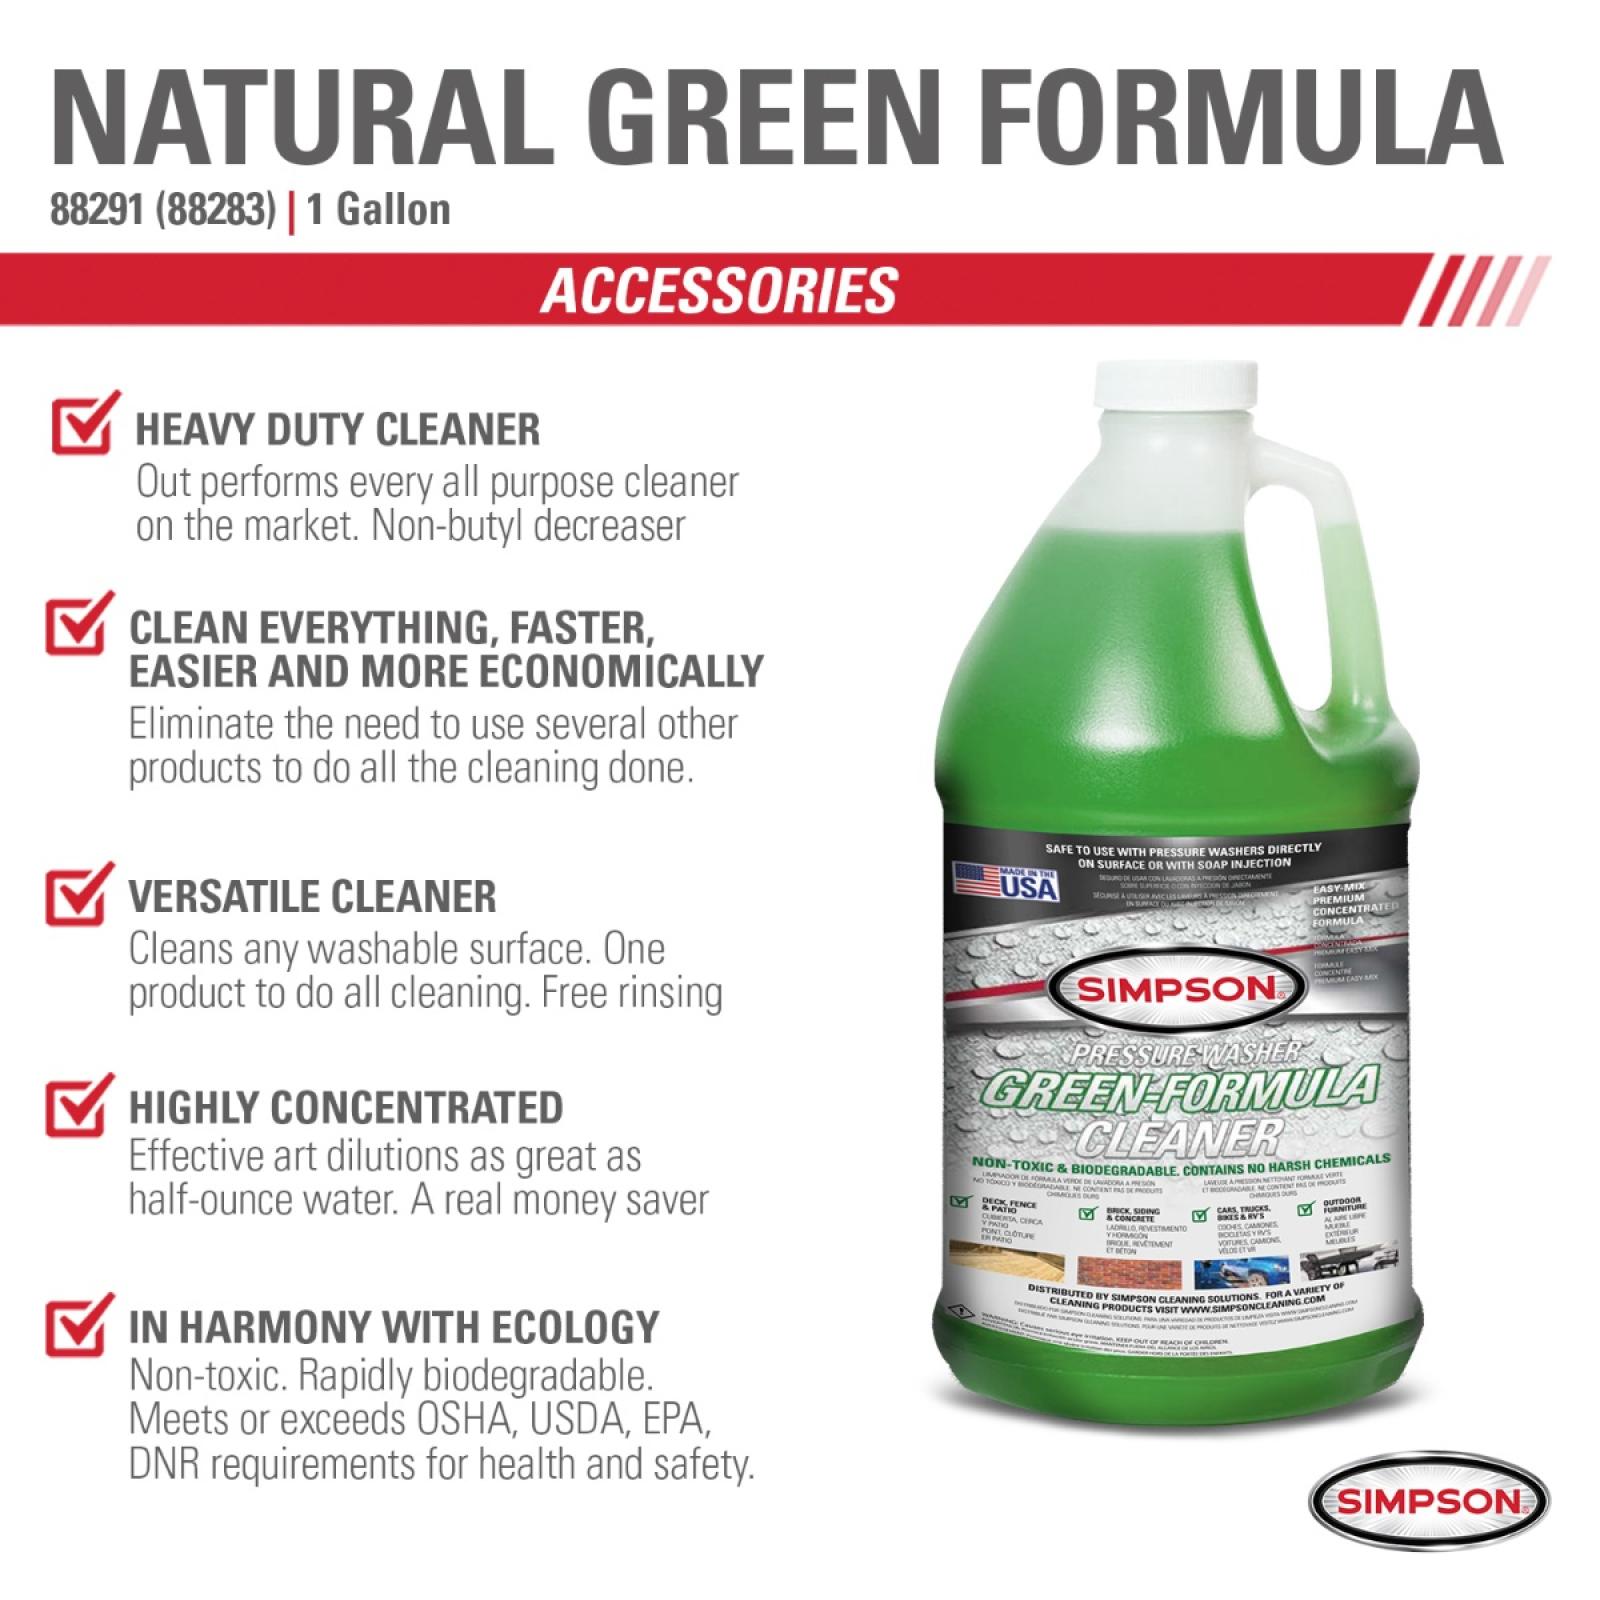 Simpson Pressure Washer Green-Formula Cleaner